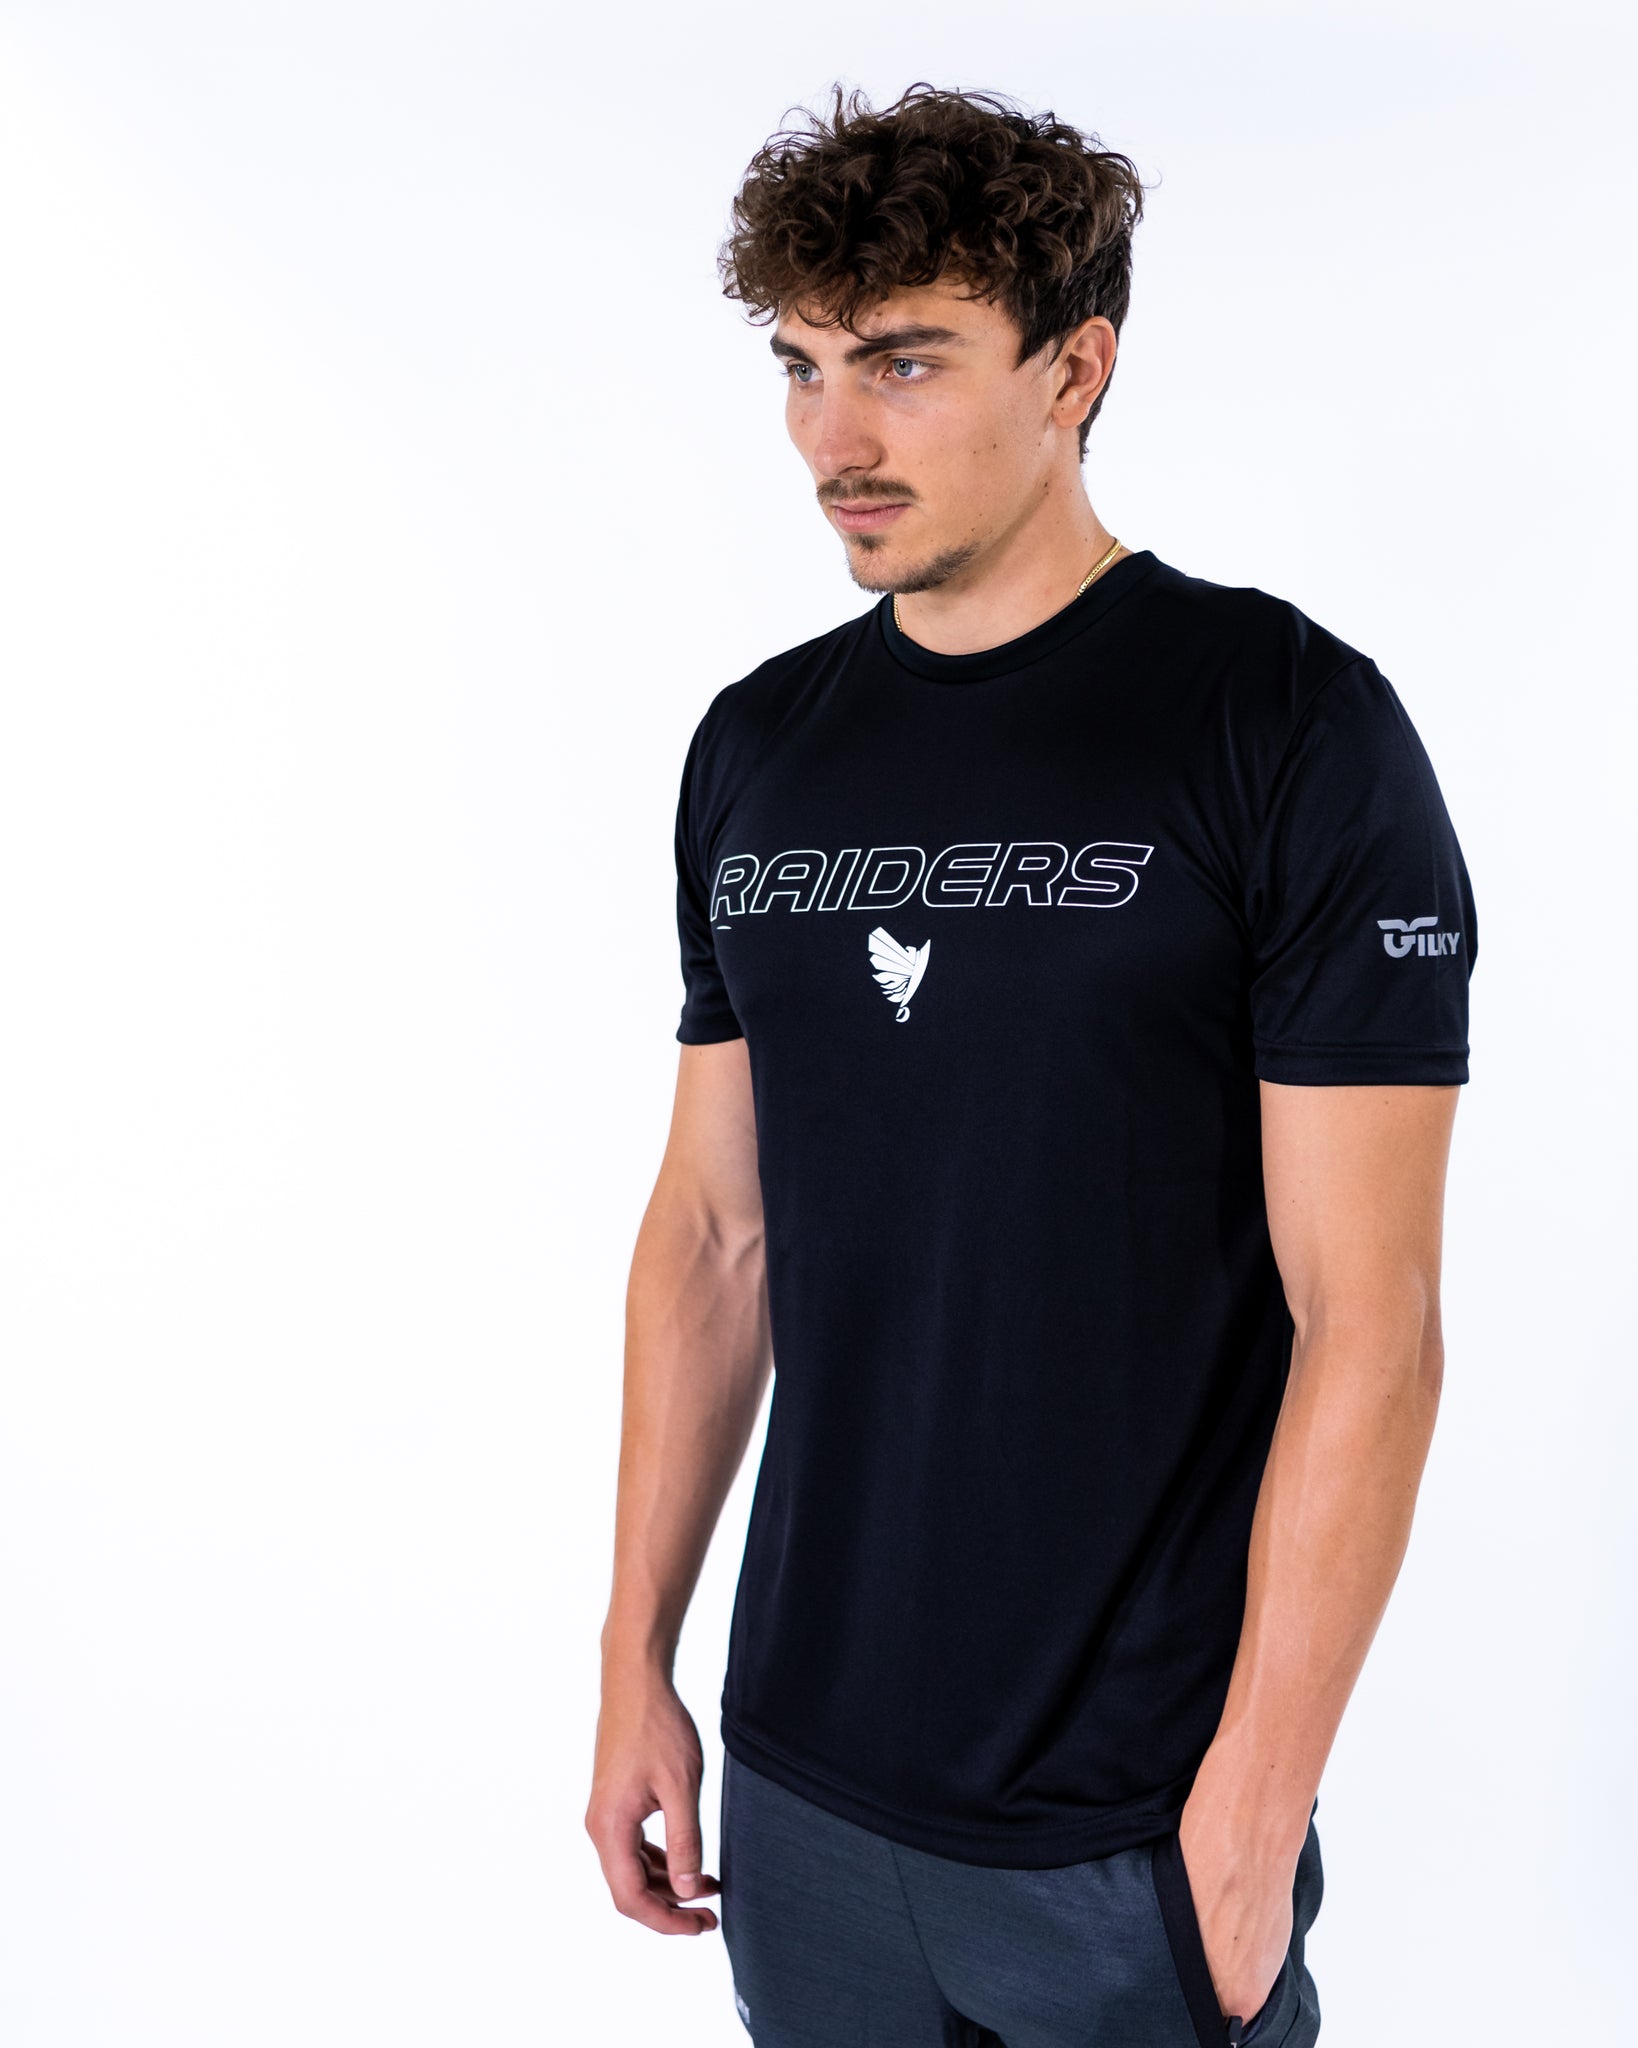 Raiders Tirol On-Field Performance T-Shirt